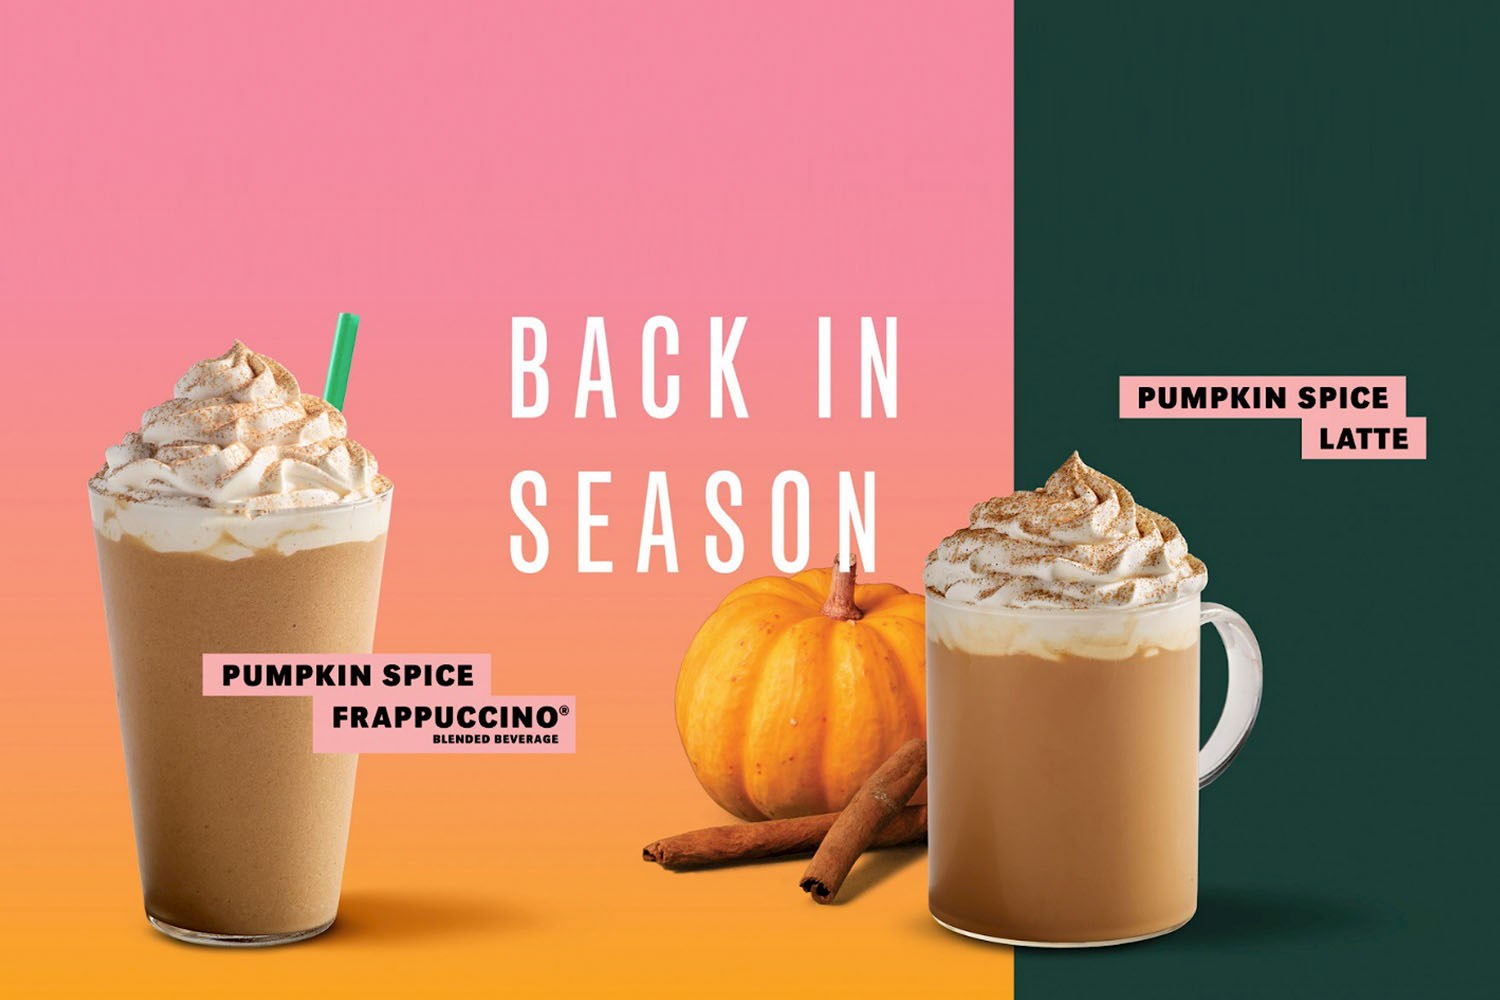 Starbucks are bringing back the pumpkin spice latte and frappucino